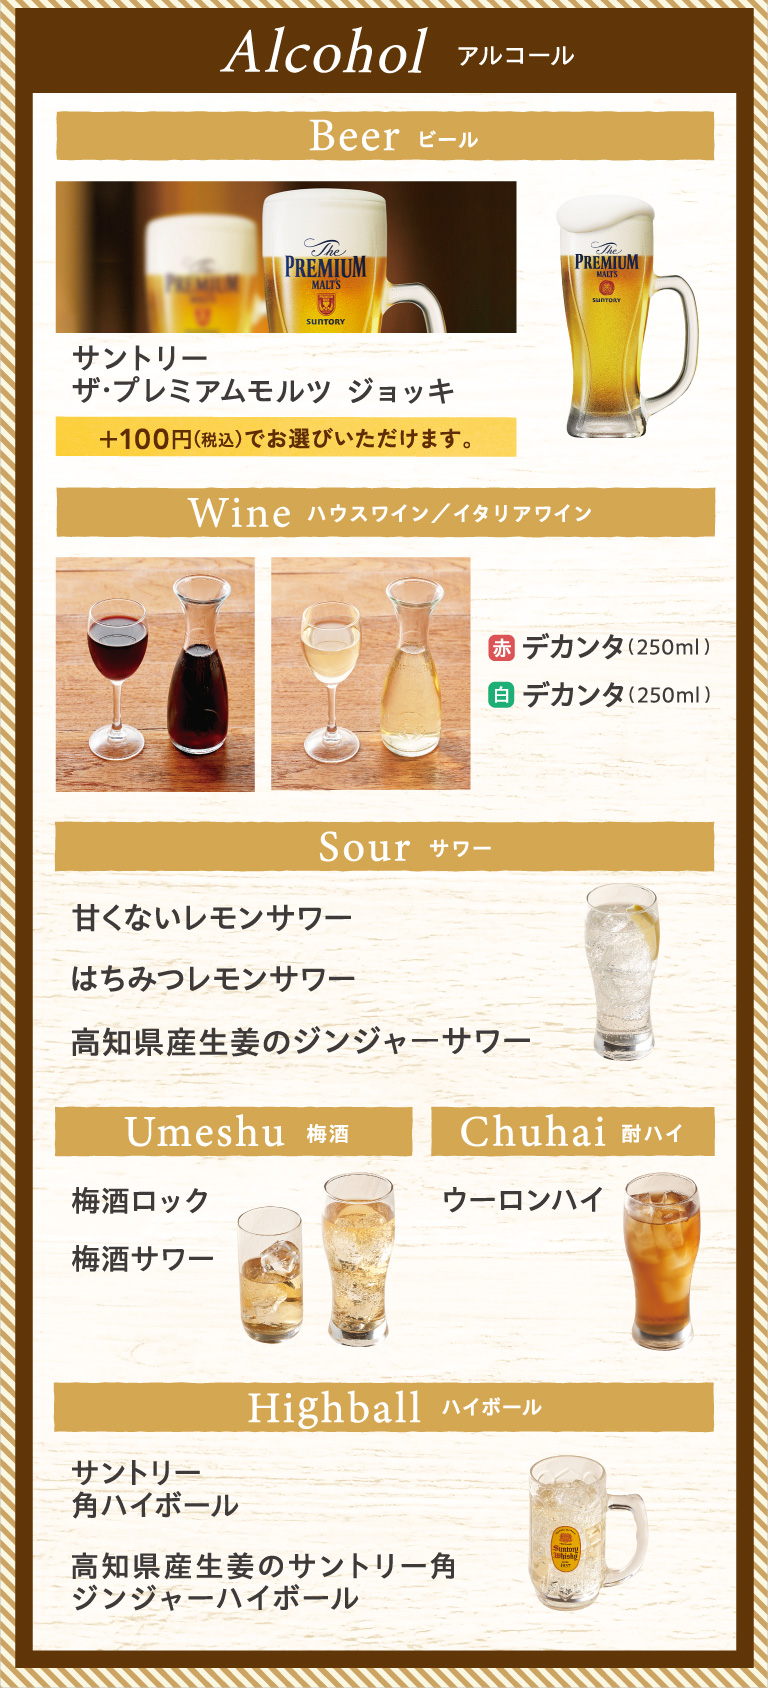 Alcohol Beer House Wine/Italian Wine Sour Ume plum wine Wine Highball